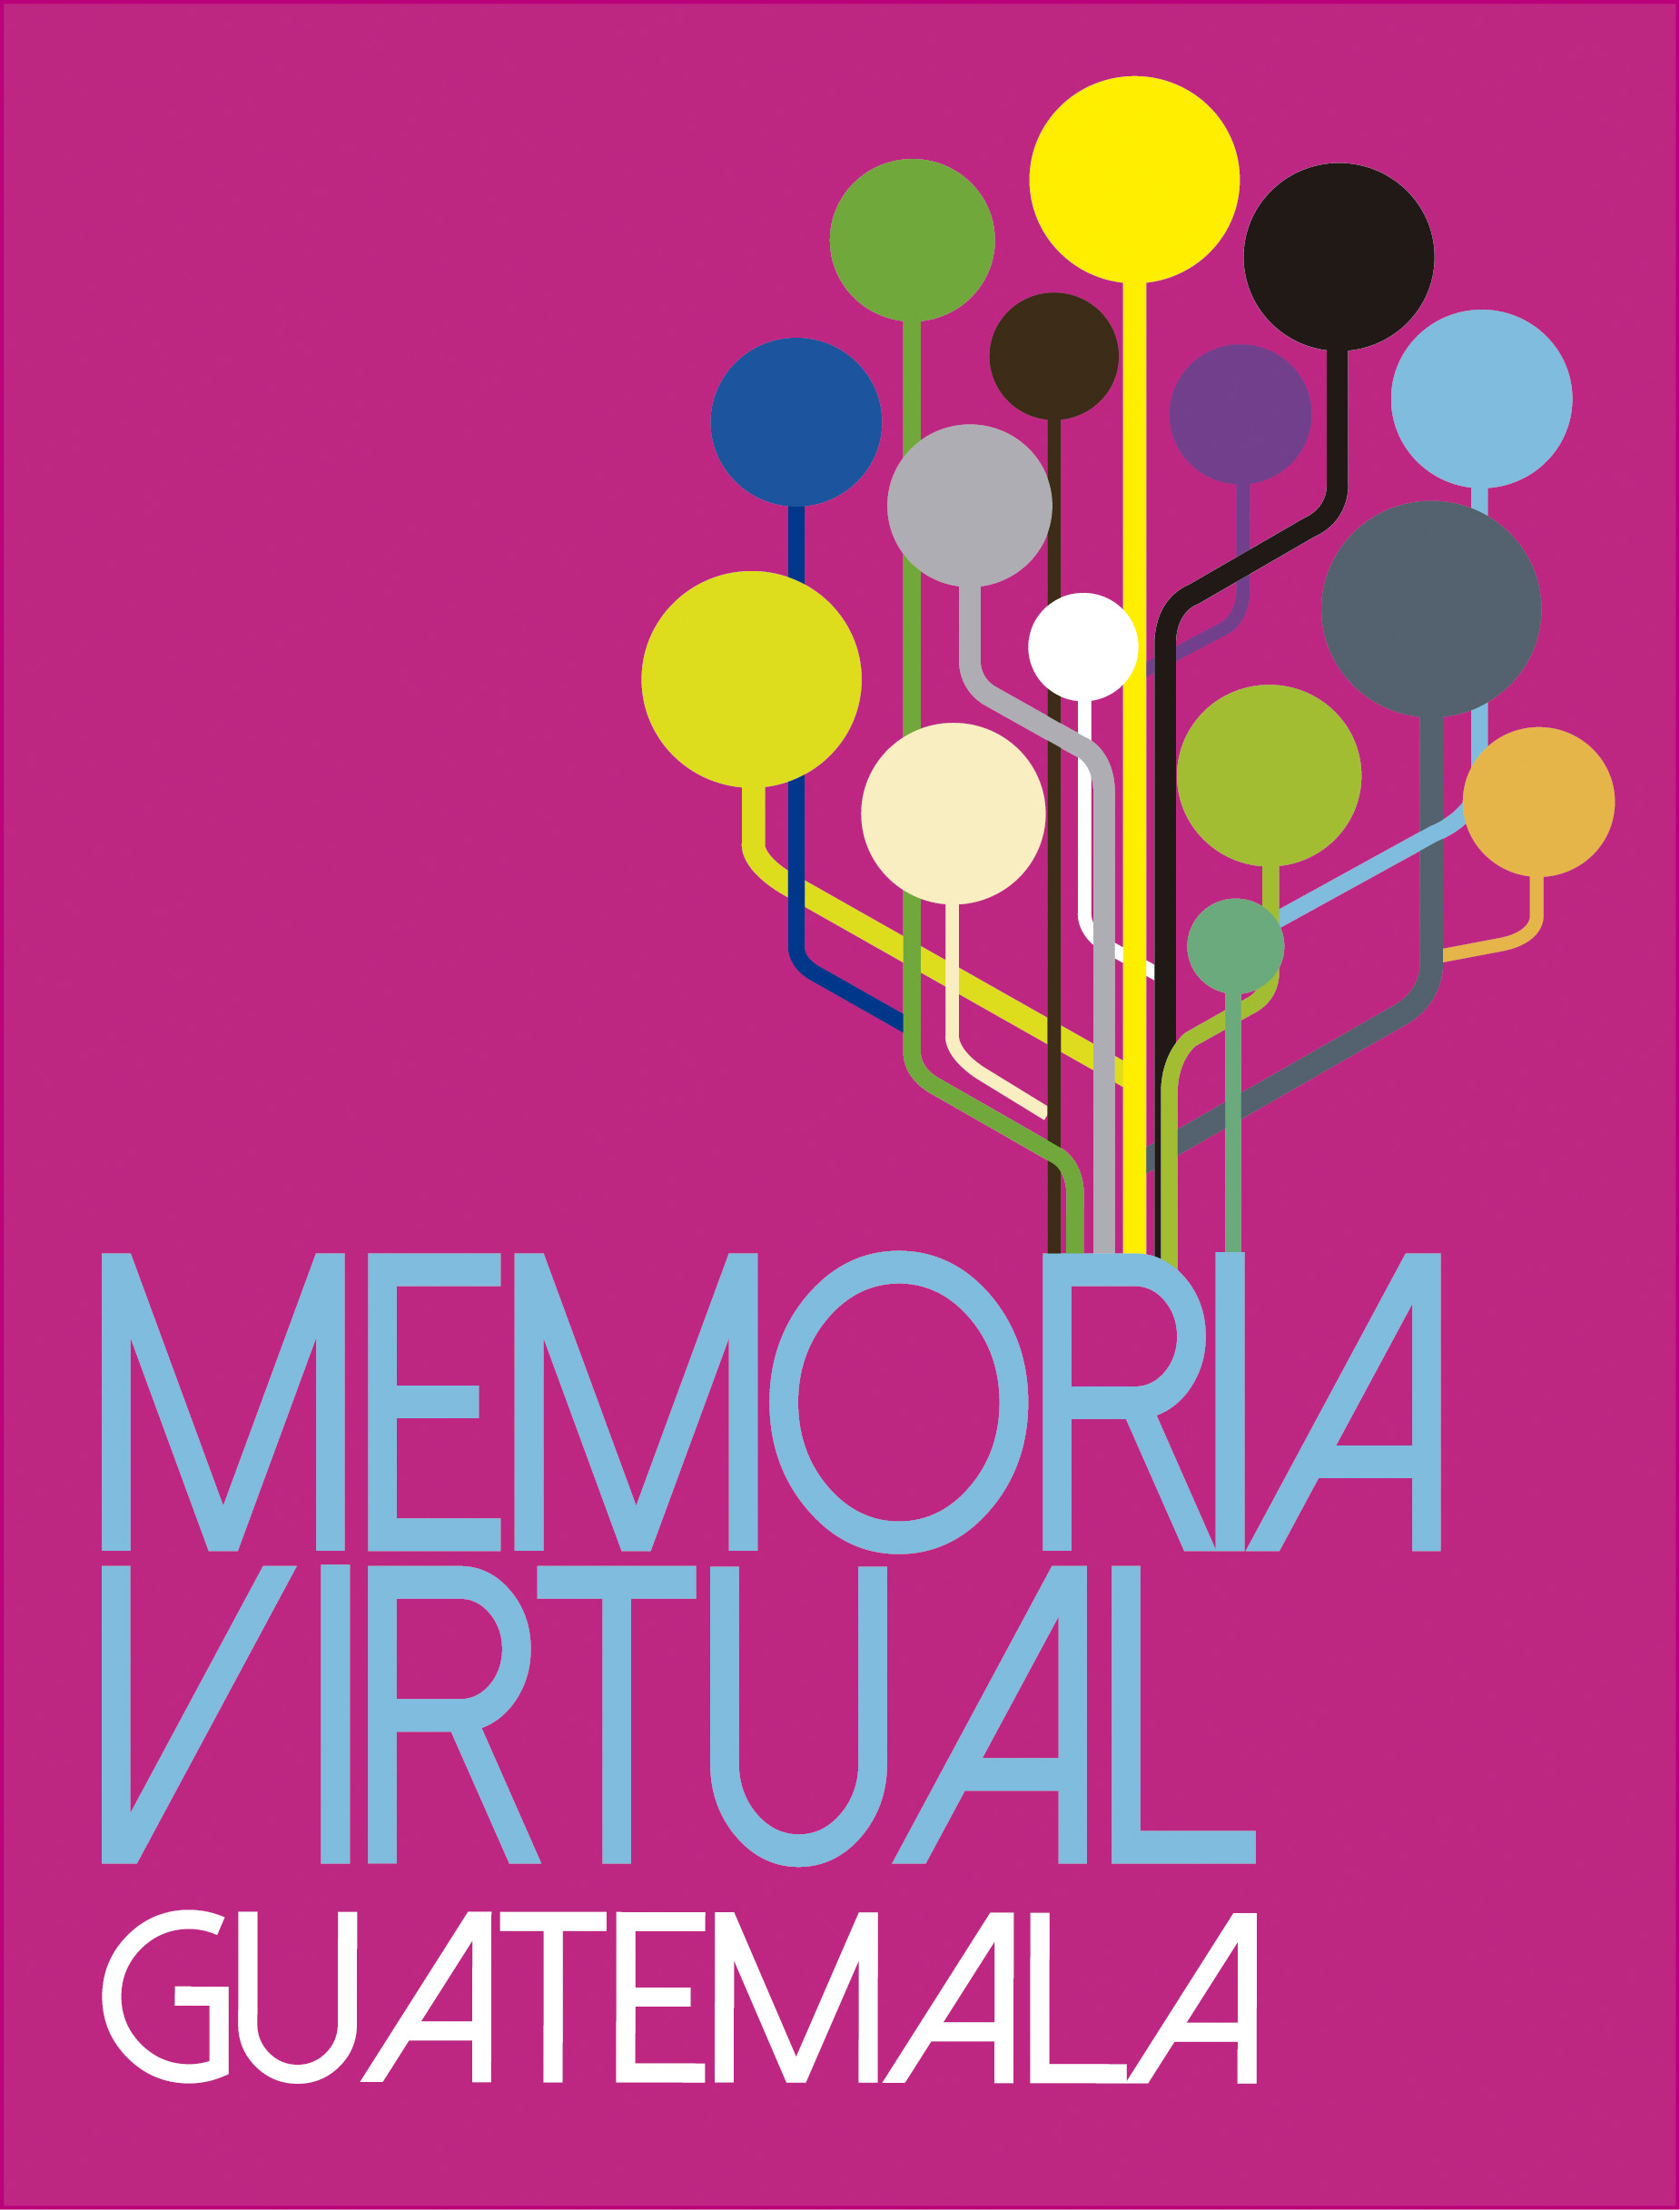 Galeria Memoria Virtual Guatemala